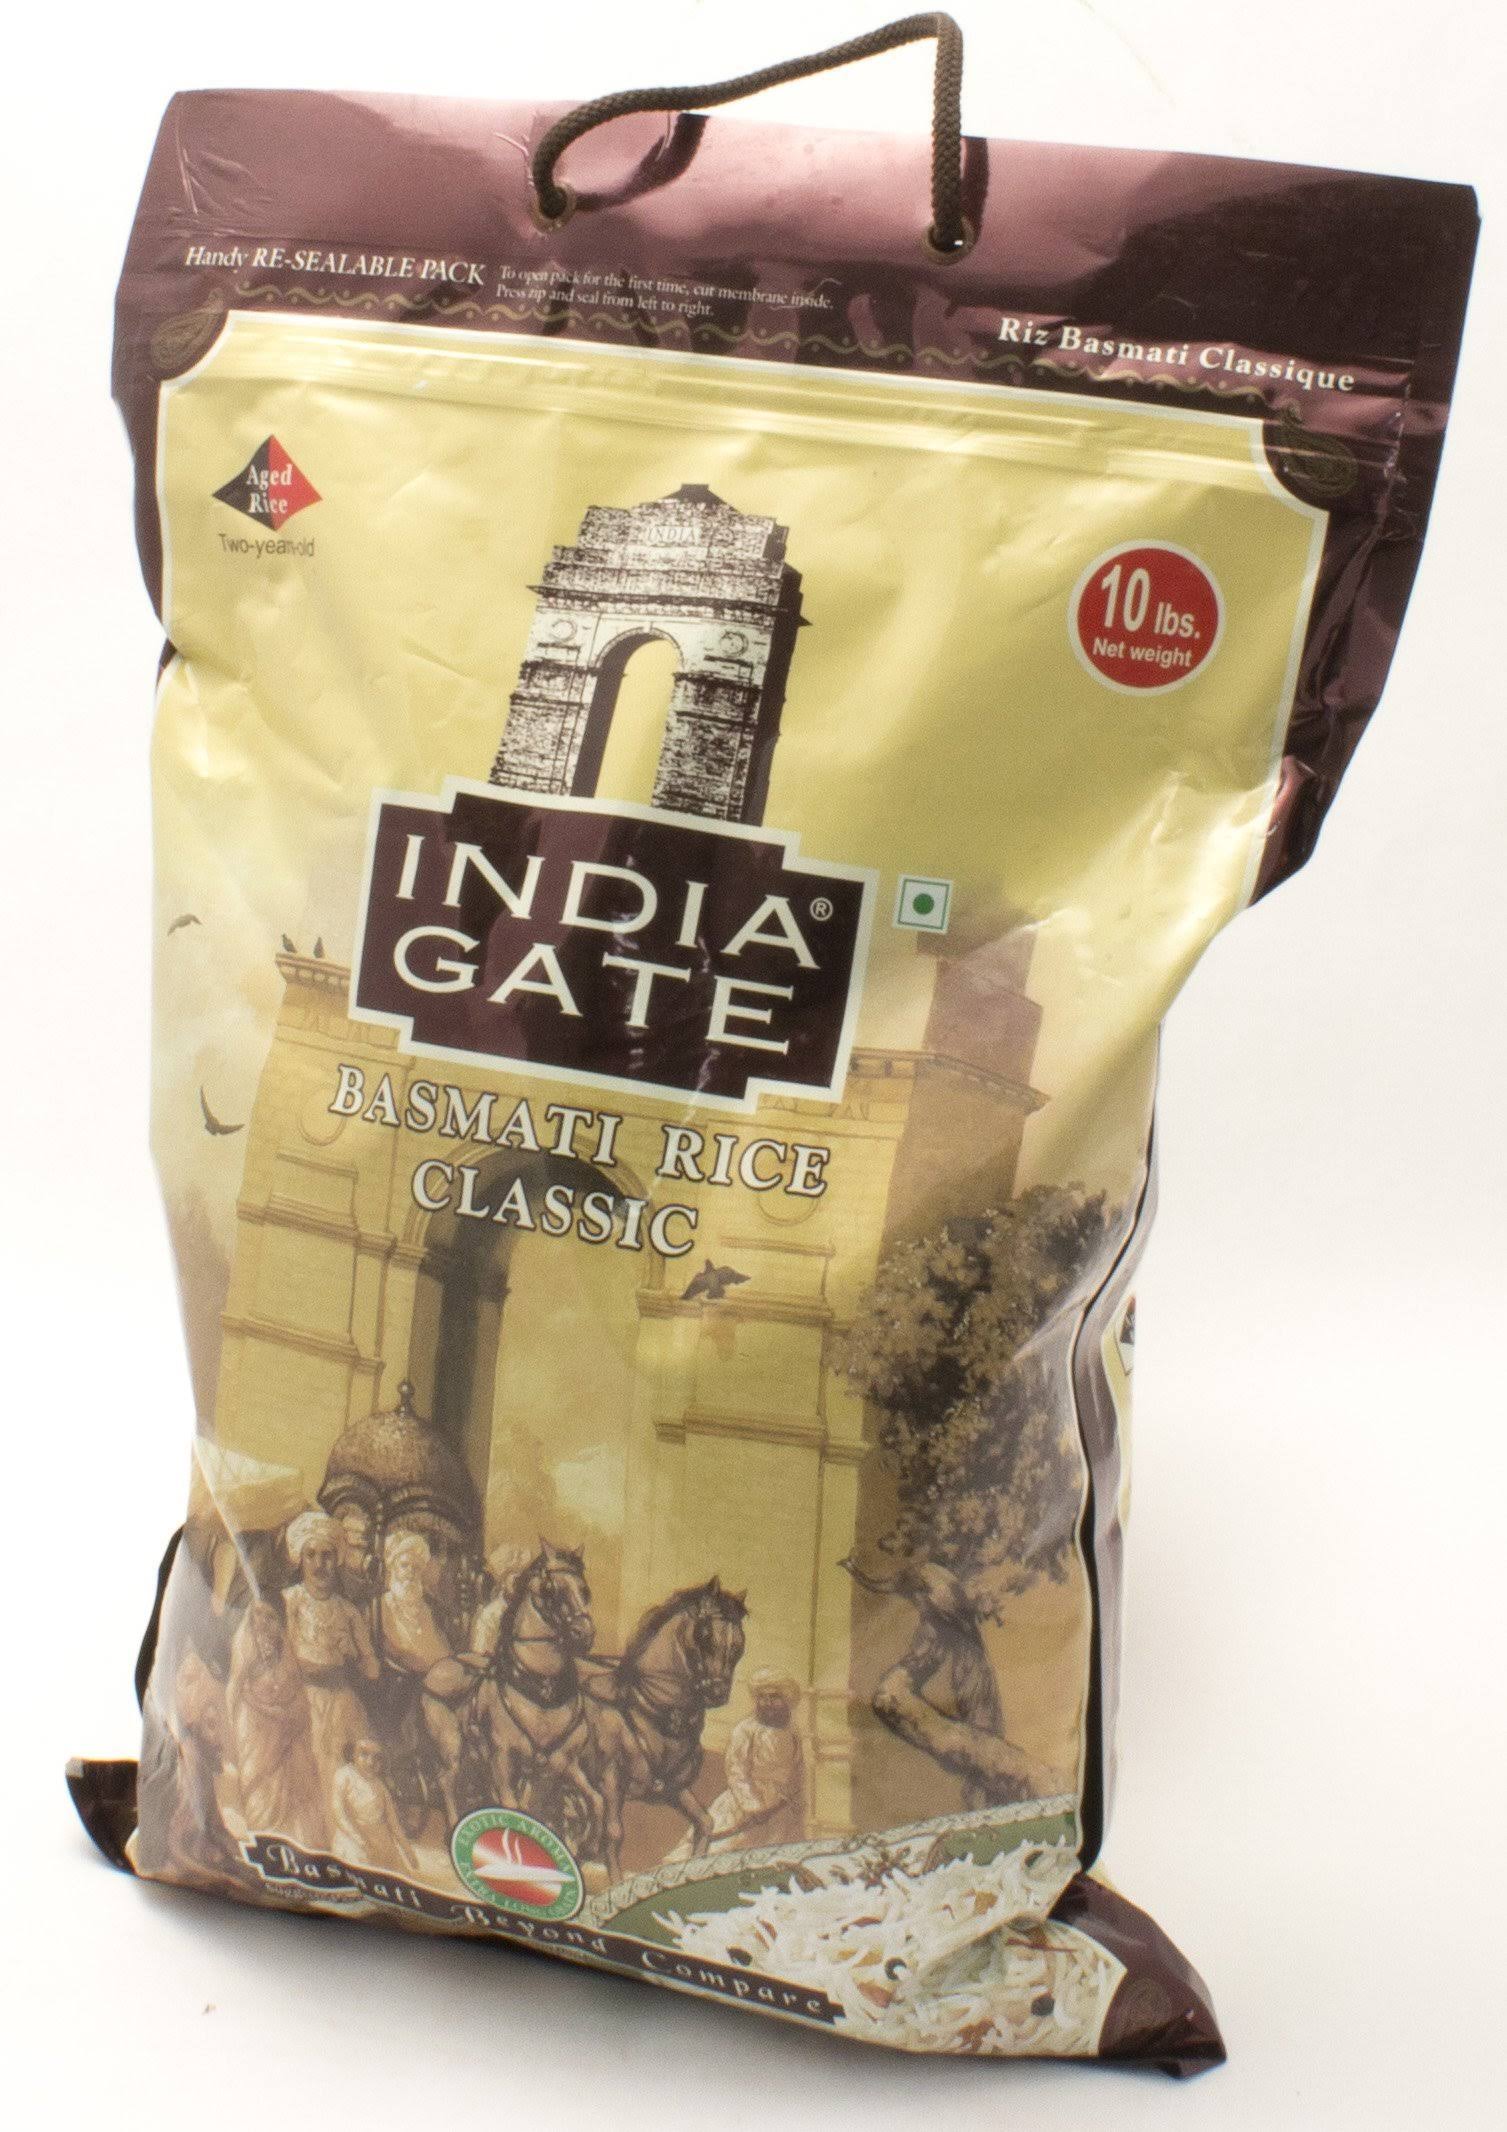 India Gate Basmati Rice - Classic, 10lbs, White